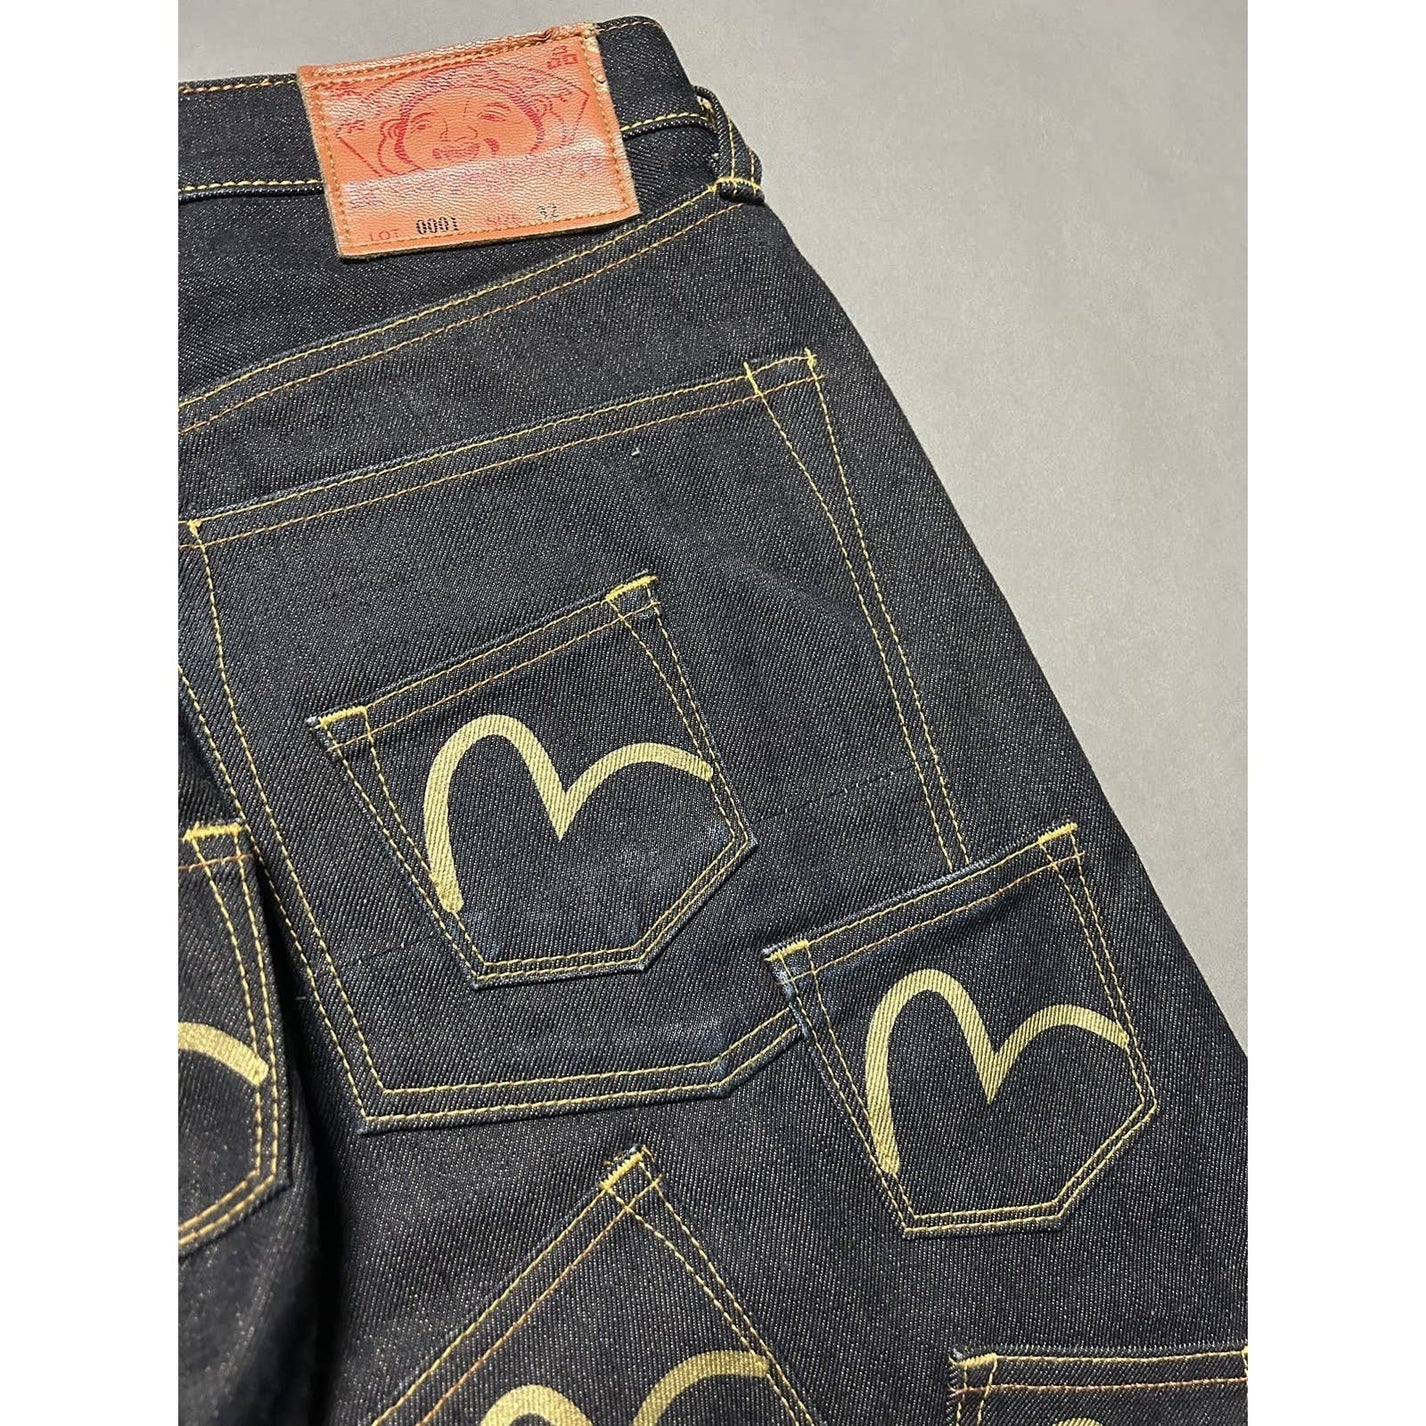 Evisu Multipocket Jeans Black Gold Vintage Selvedge Denim Lodz Polska tyl2